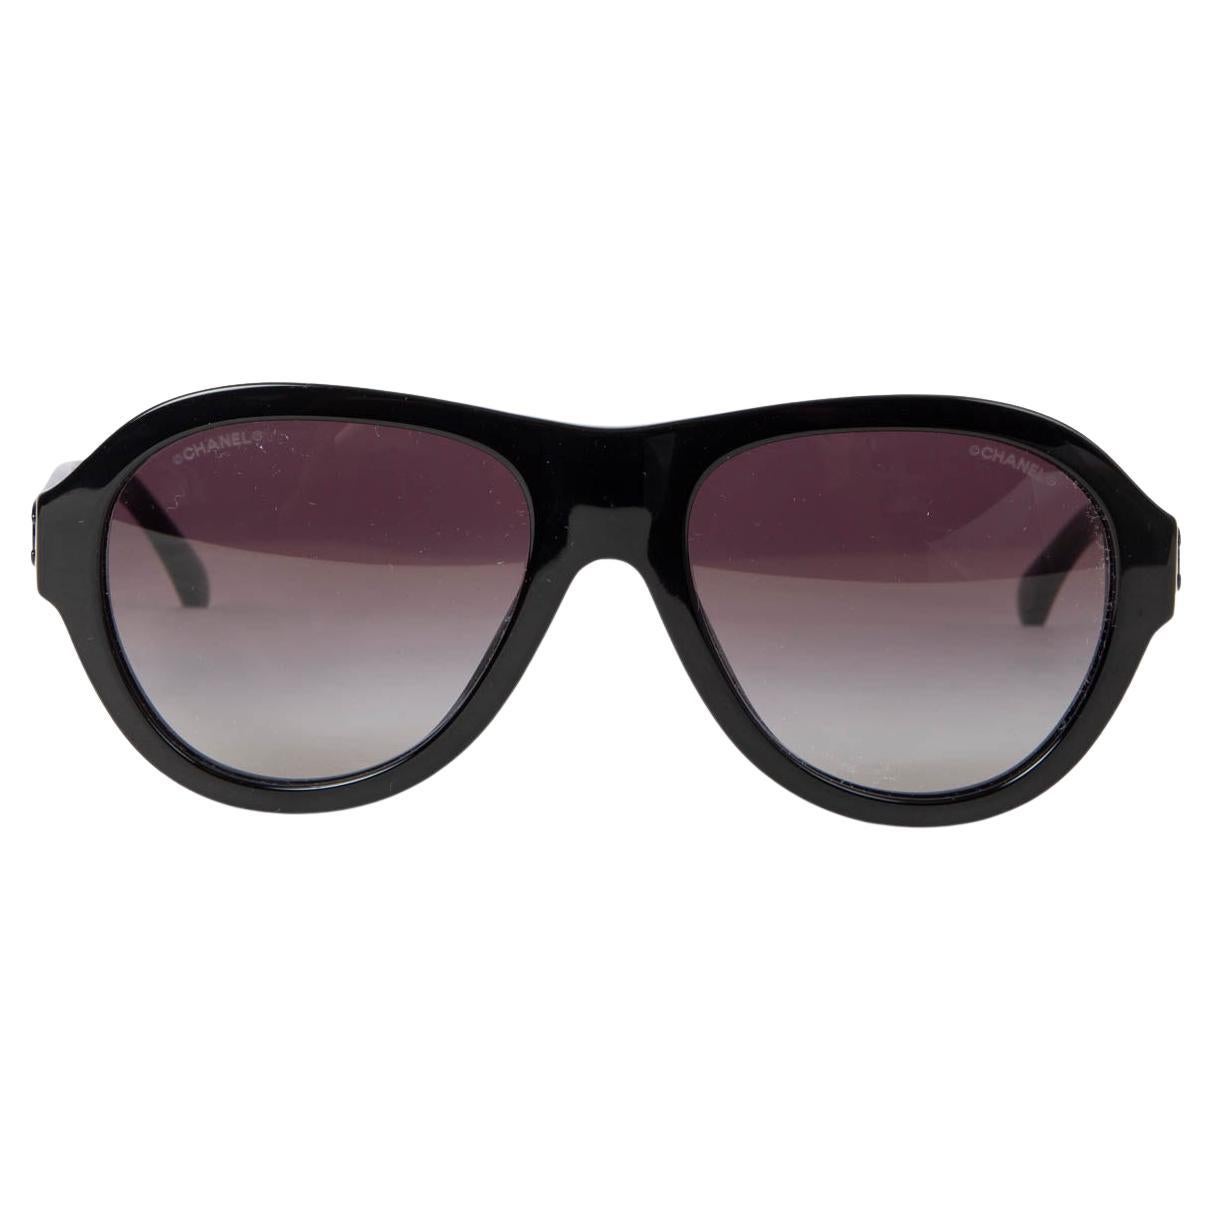 CHANEL black 5467-B AVIATOR Sunglasses Gradient Lens